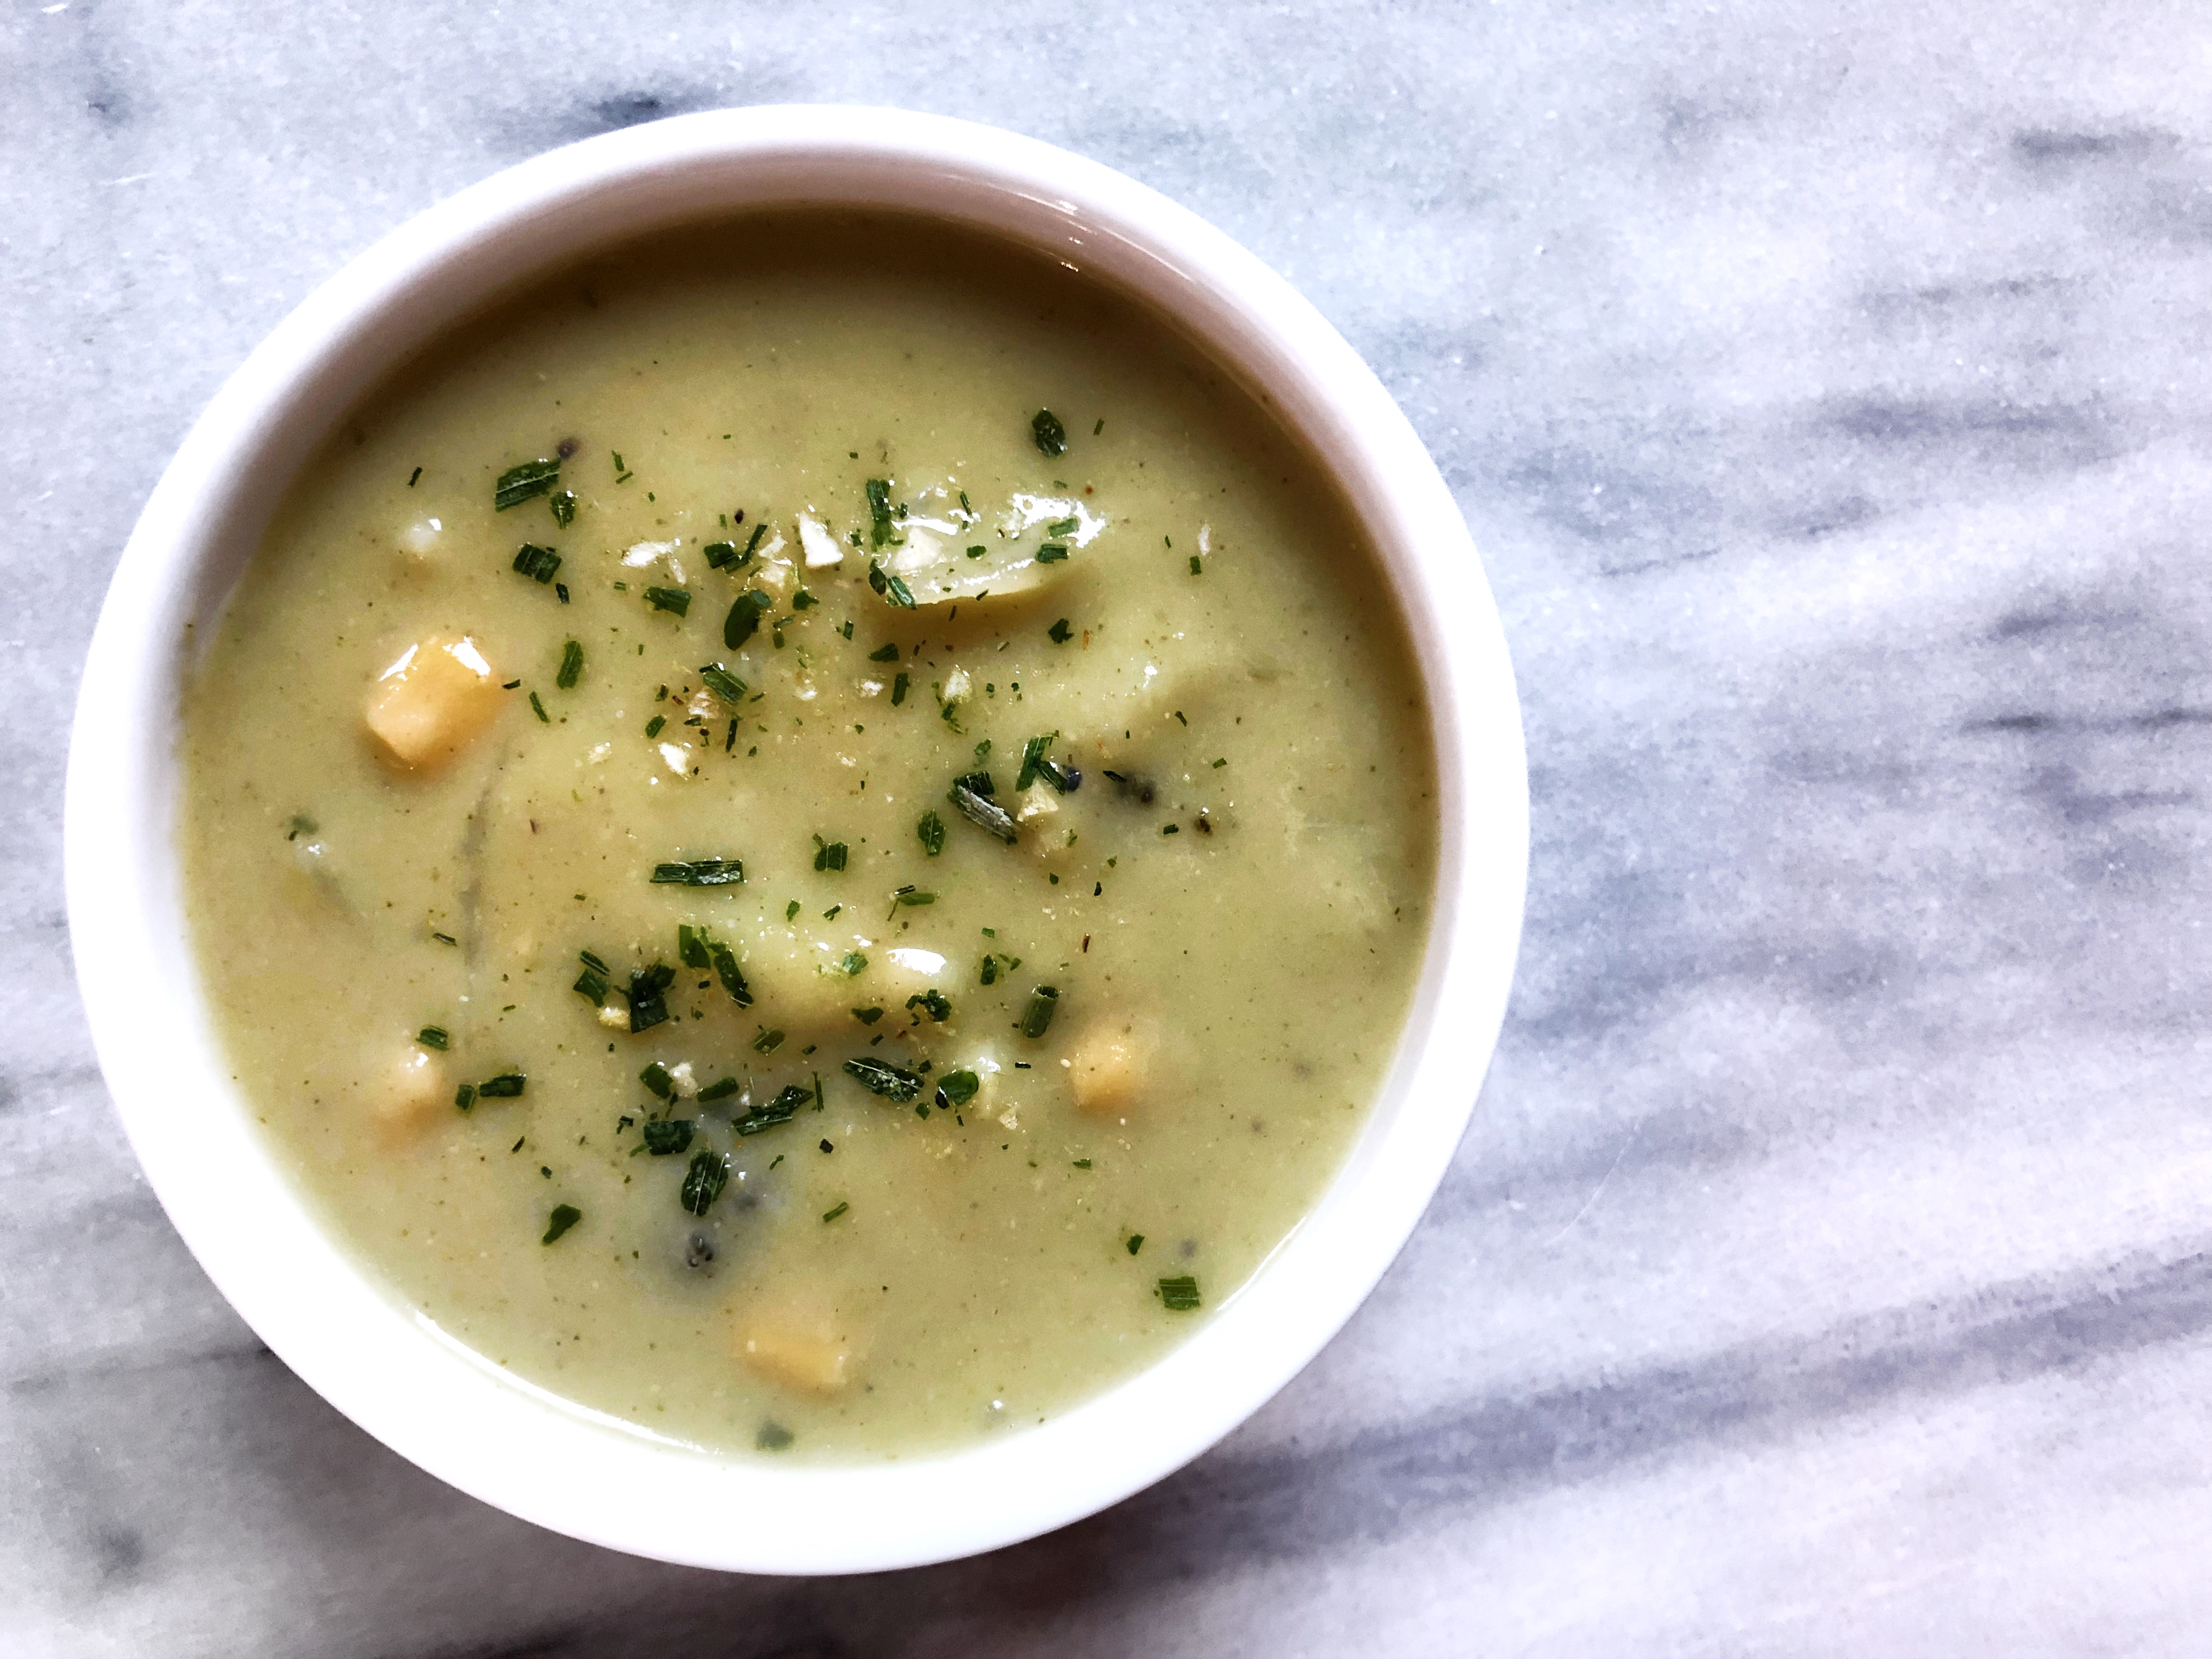 A healthier twist on traditional corn chowder soup